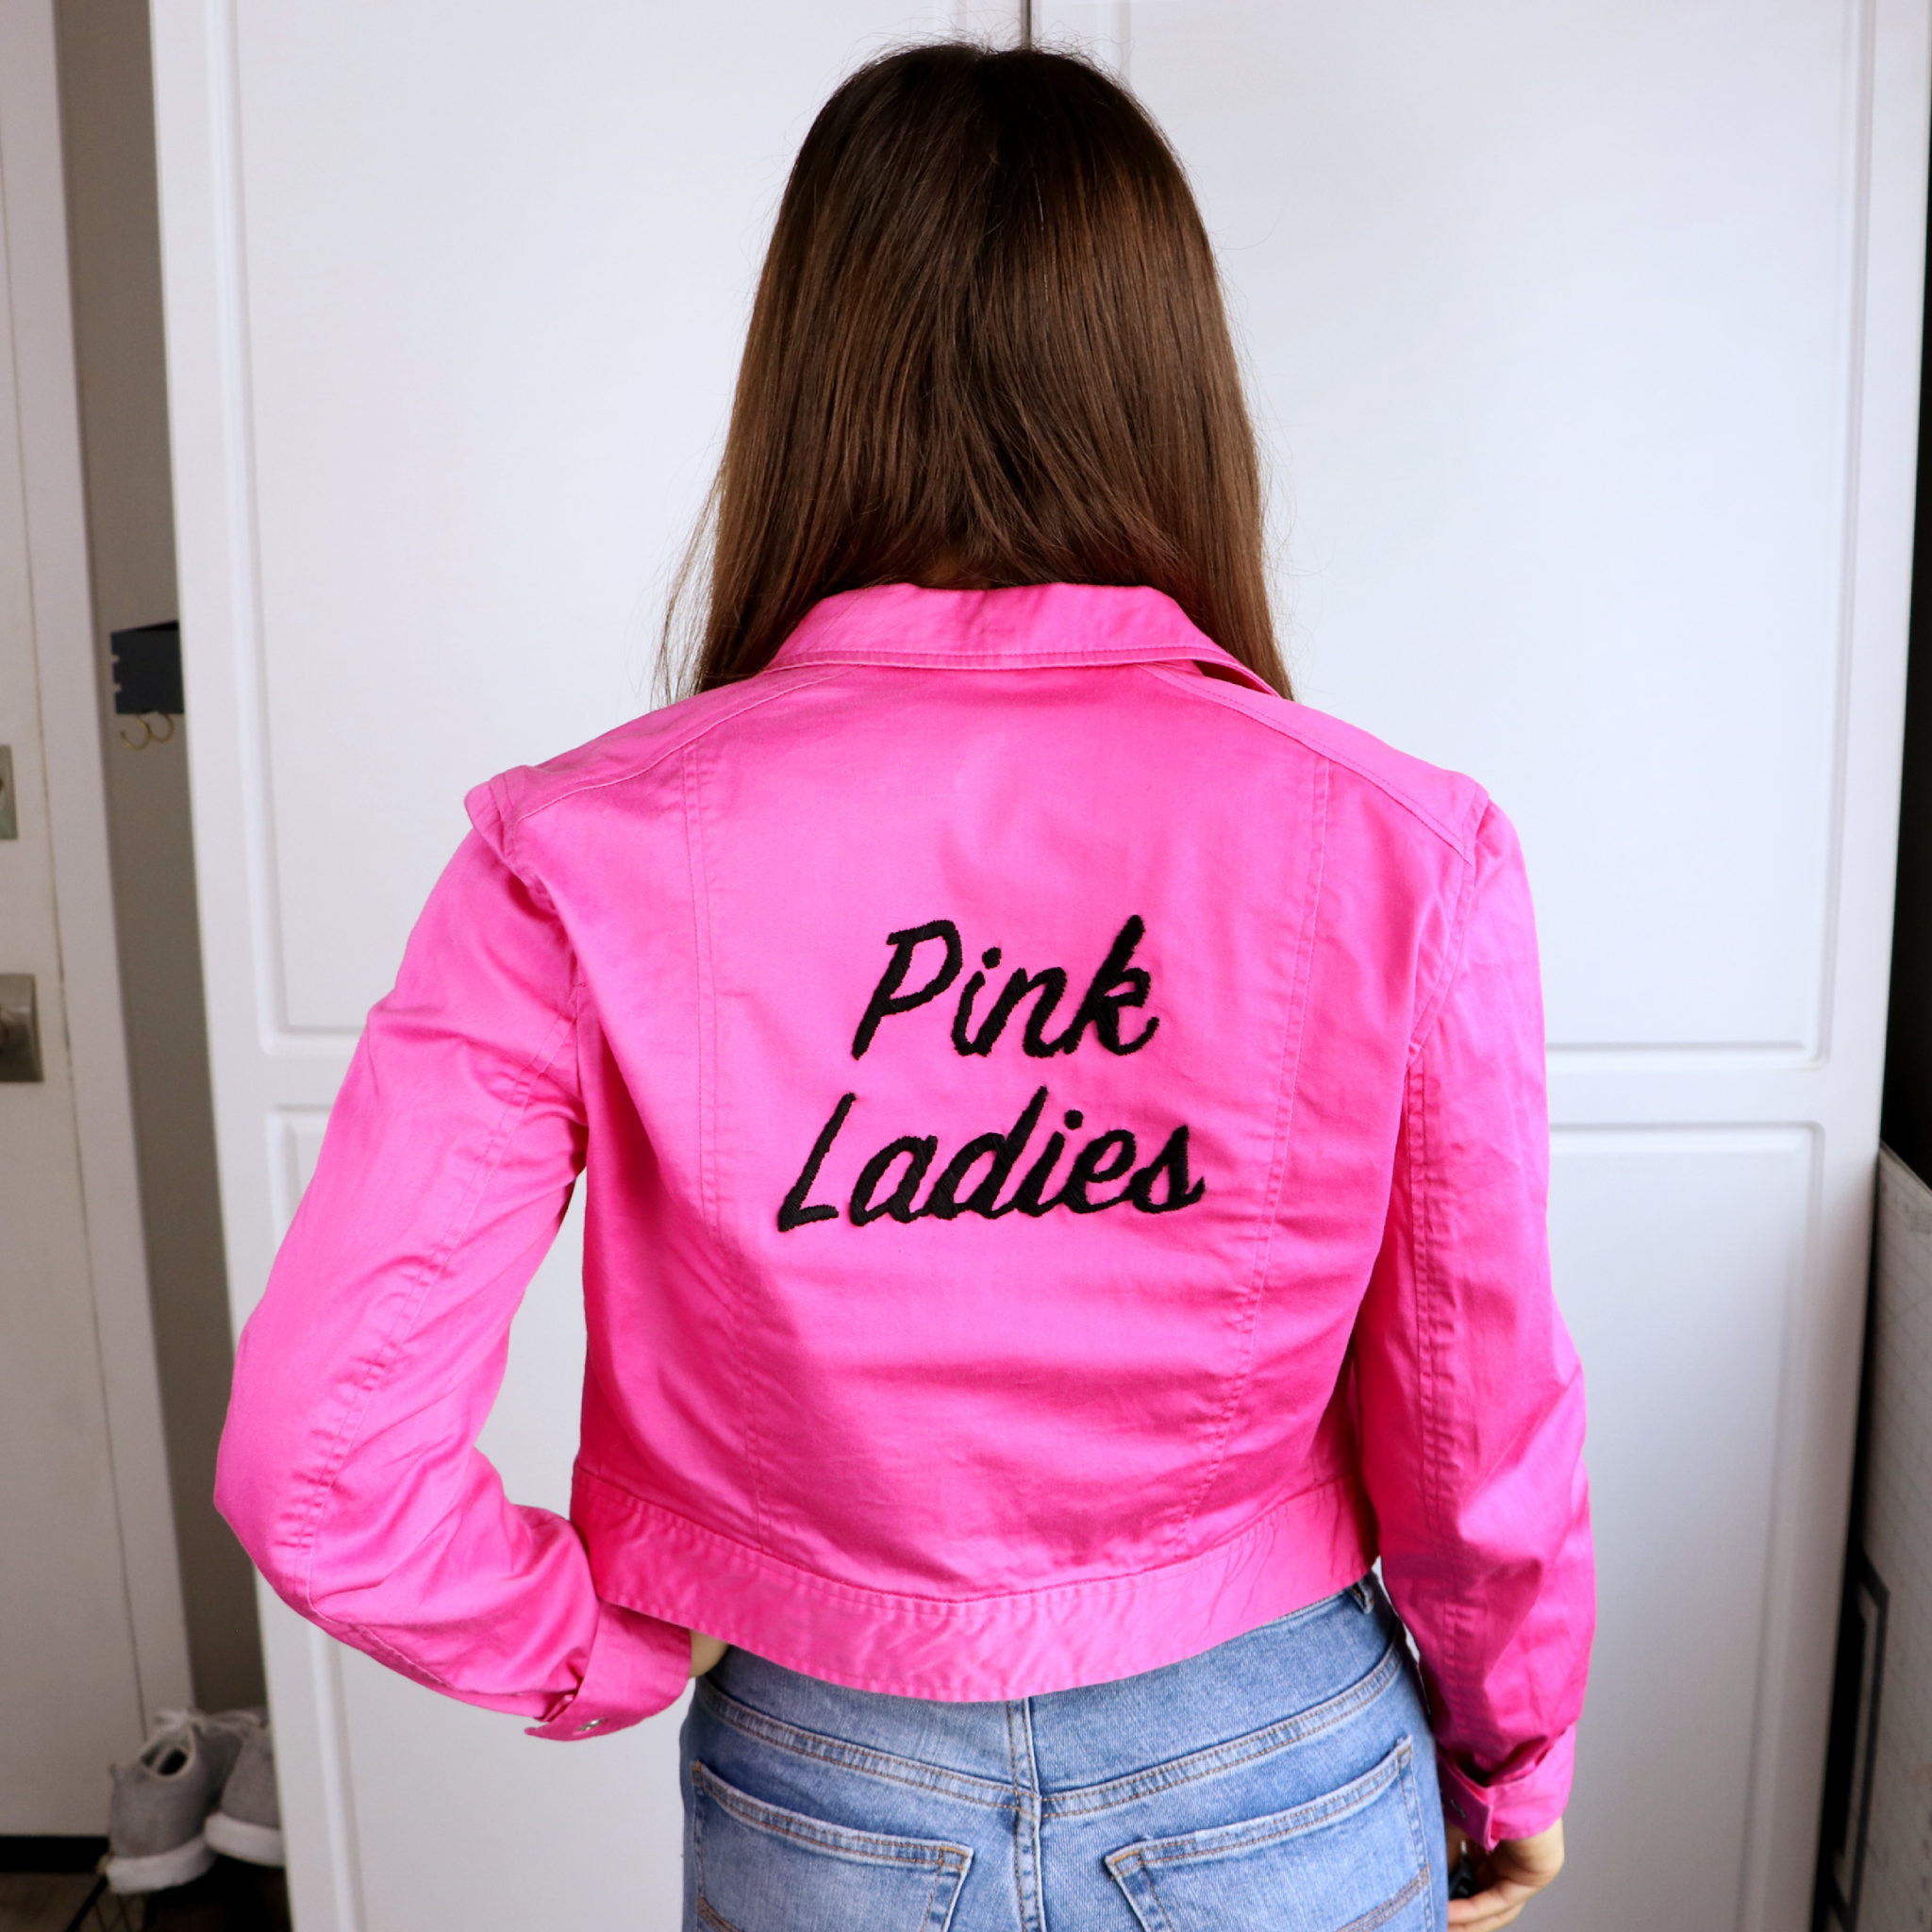 Best ideas about DIY Pink Ladies Costume
. Save or Pin DIY Pink La s Jacket Karen Kavett Now.